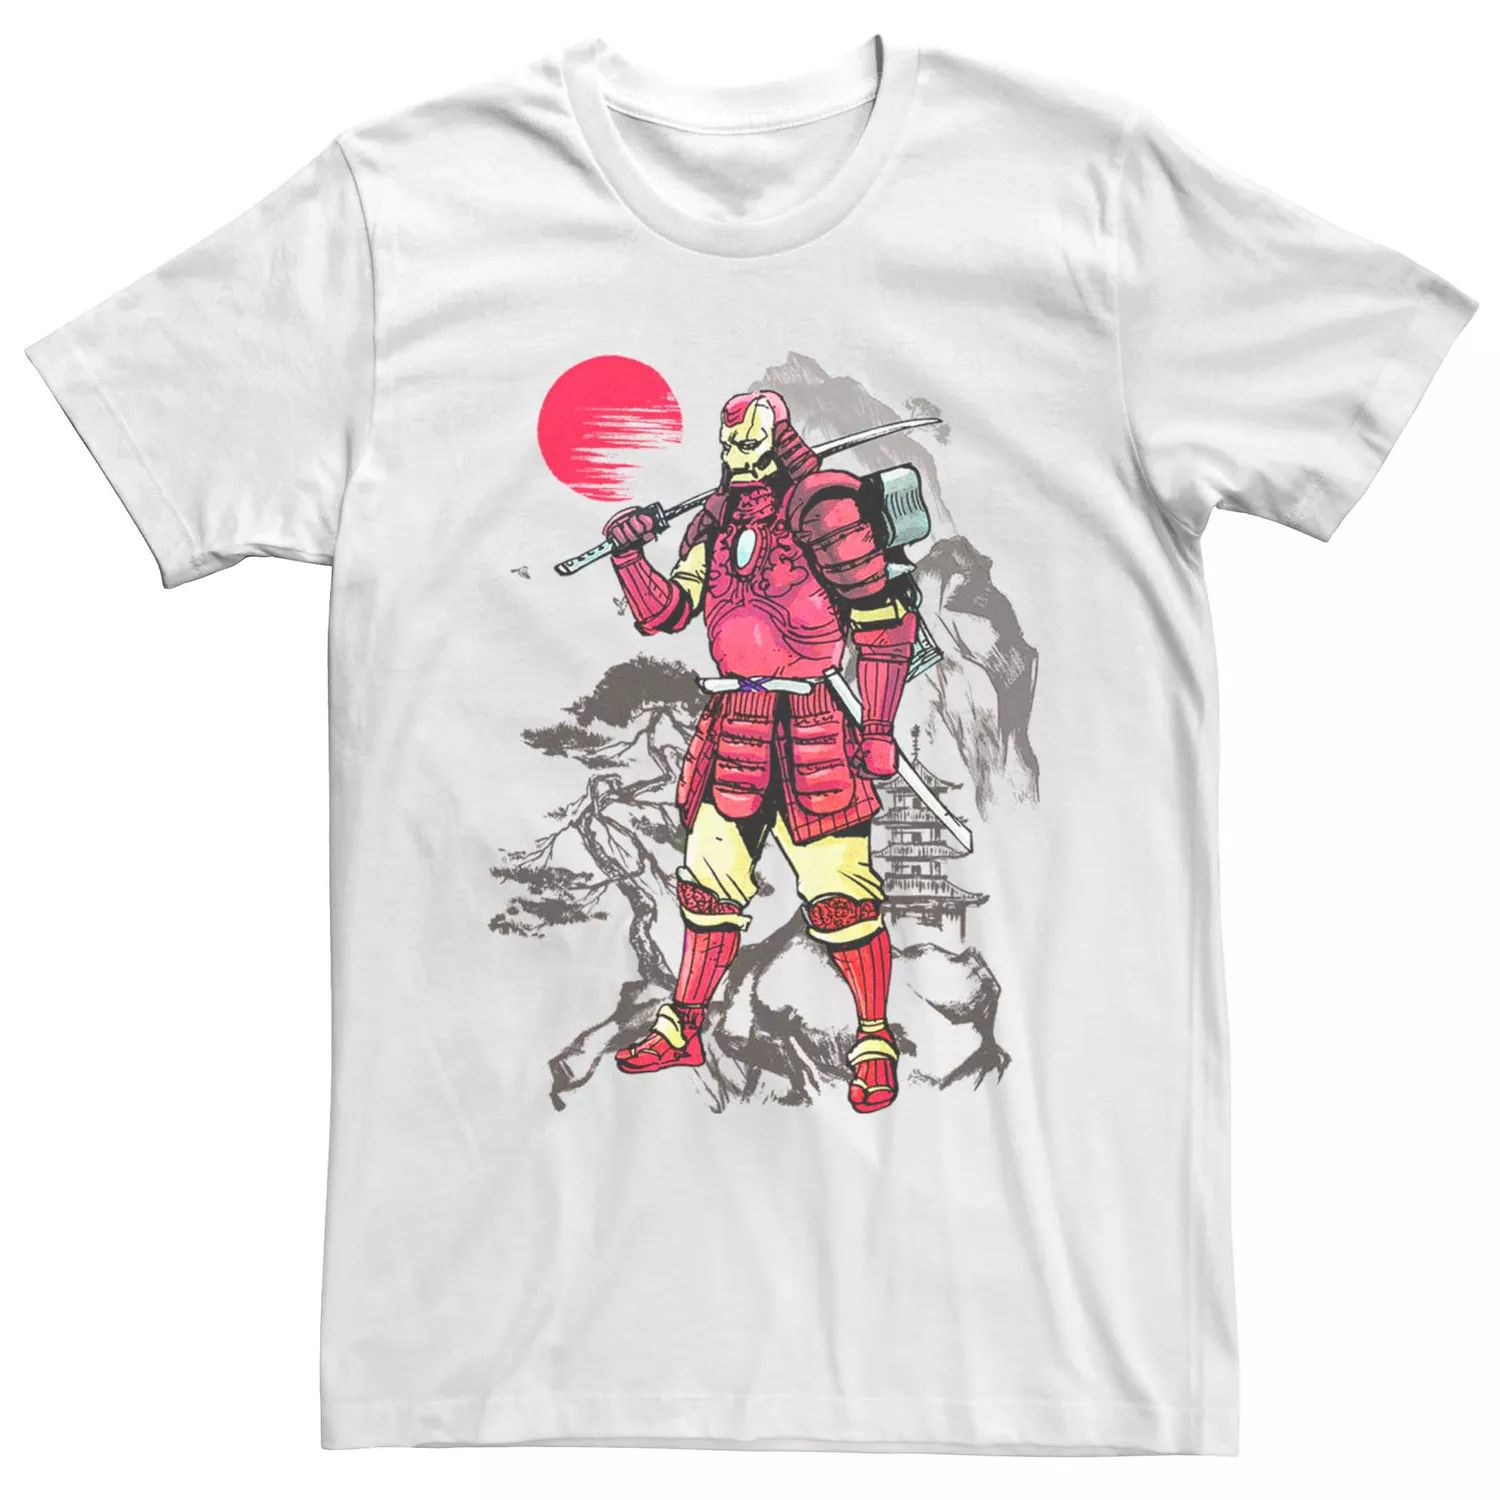 Мужская футболка с портретом самурая Marvel Iron Man Licensed Character мужская футболка marvel iron man arc reactor heart с портретом licensed character